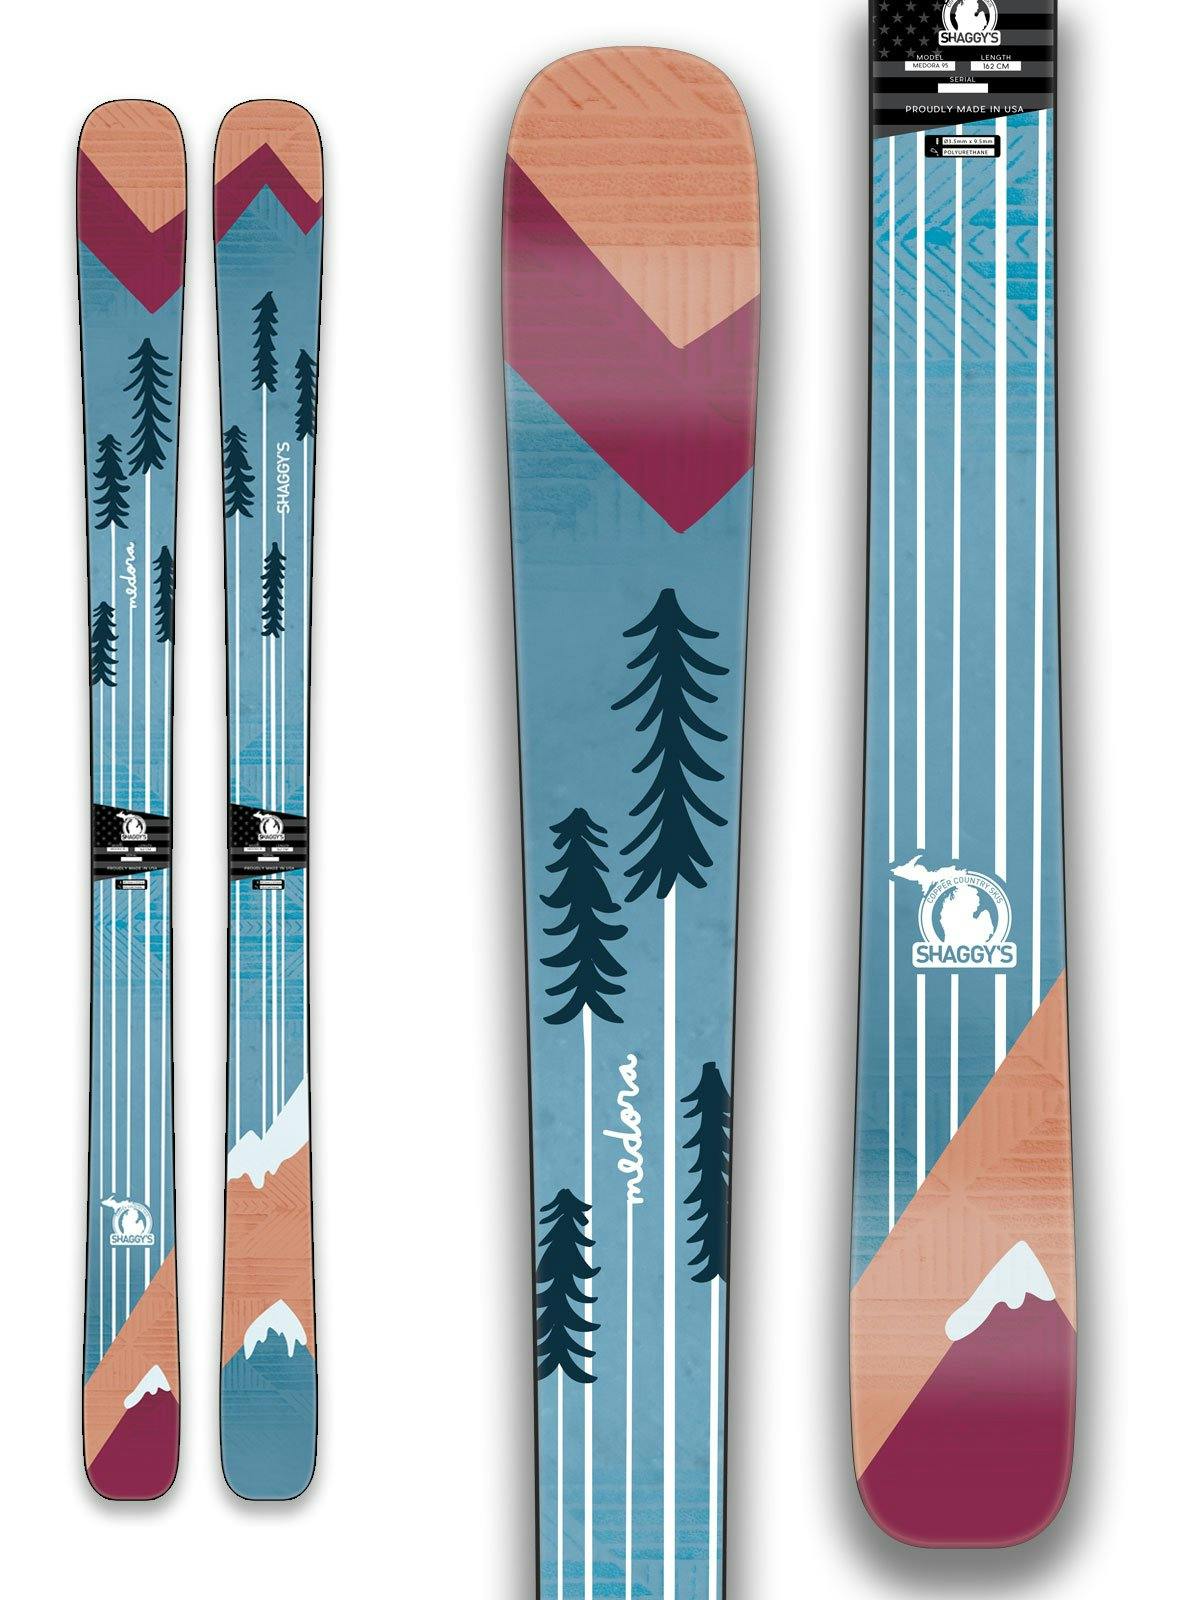 Shaggy’s Skis Medora 95 skis